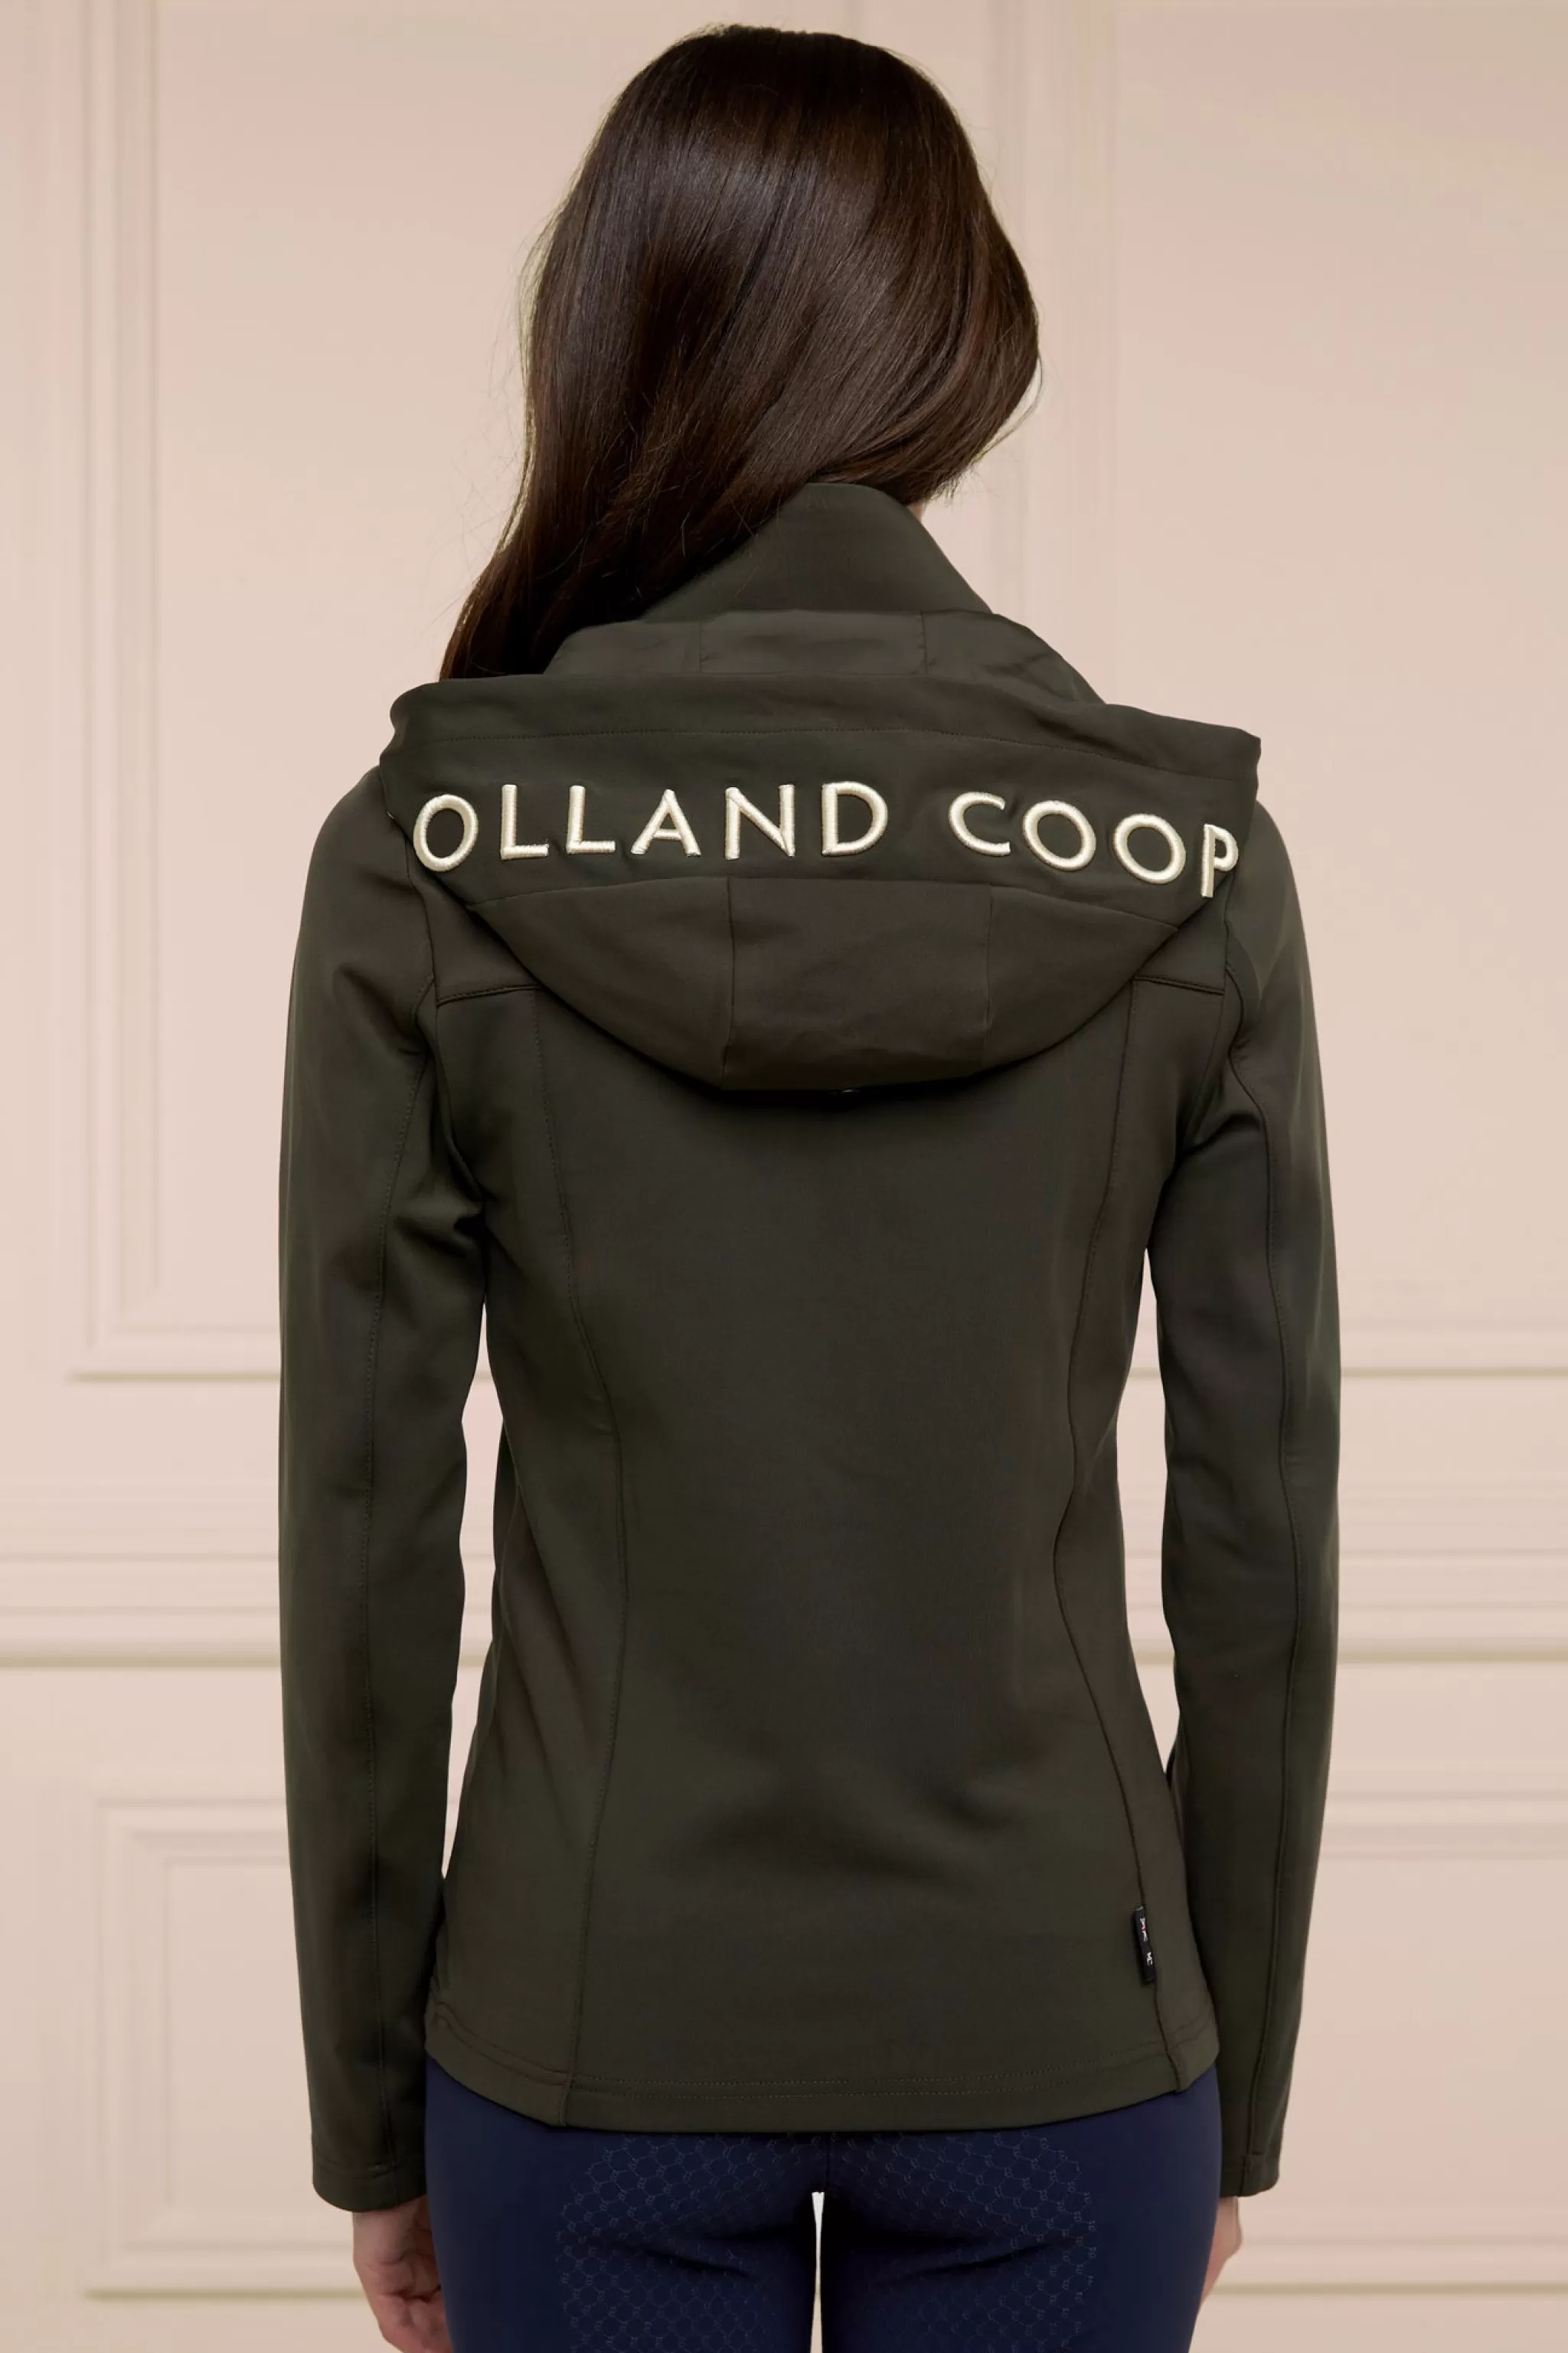 Rocana Softshell Jacket>Holland Cooper Sale